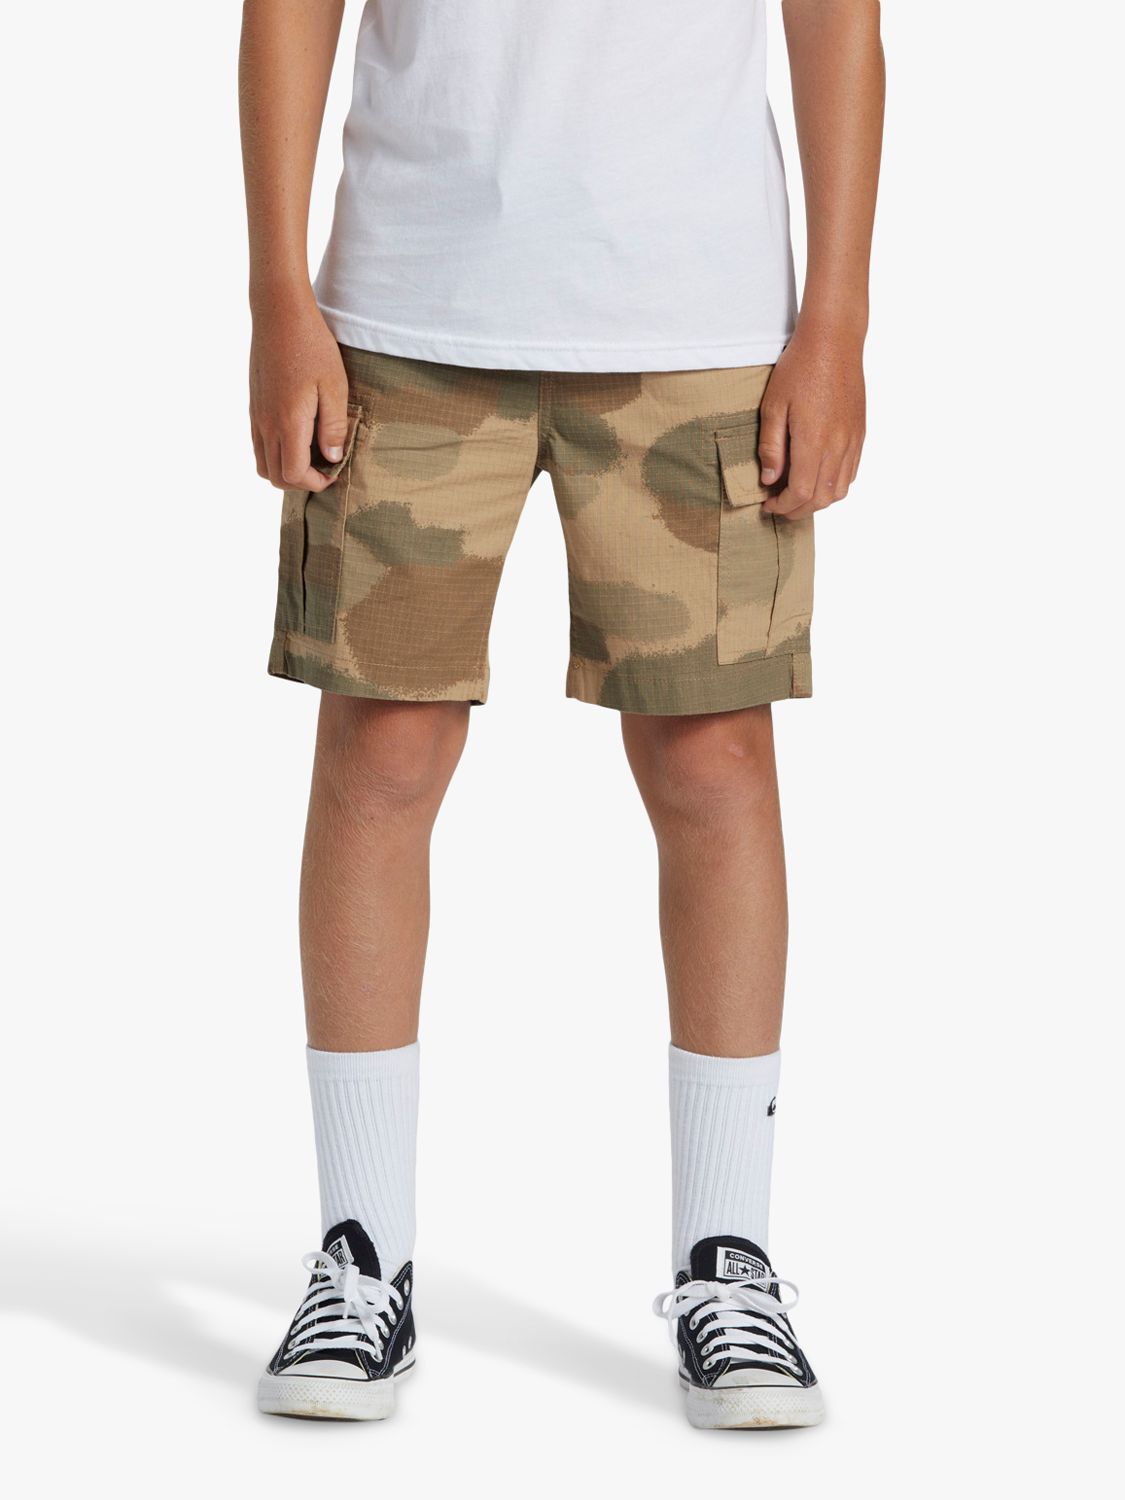 Quicksilver Kids' Oganic Cotton Blend Taxer Cargo Walk Shorts, Camo, 16 years